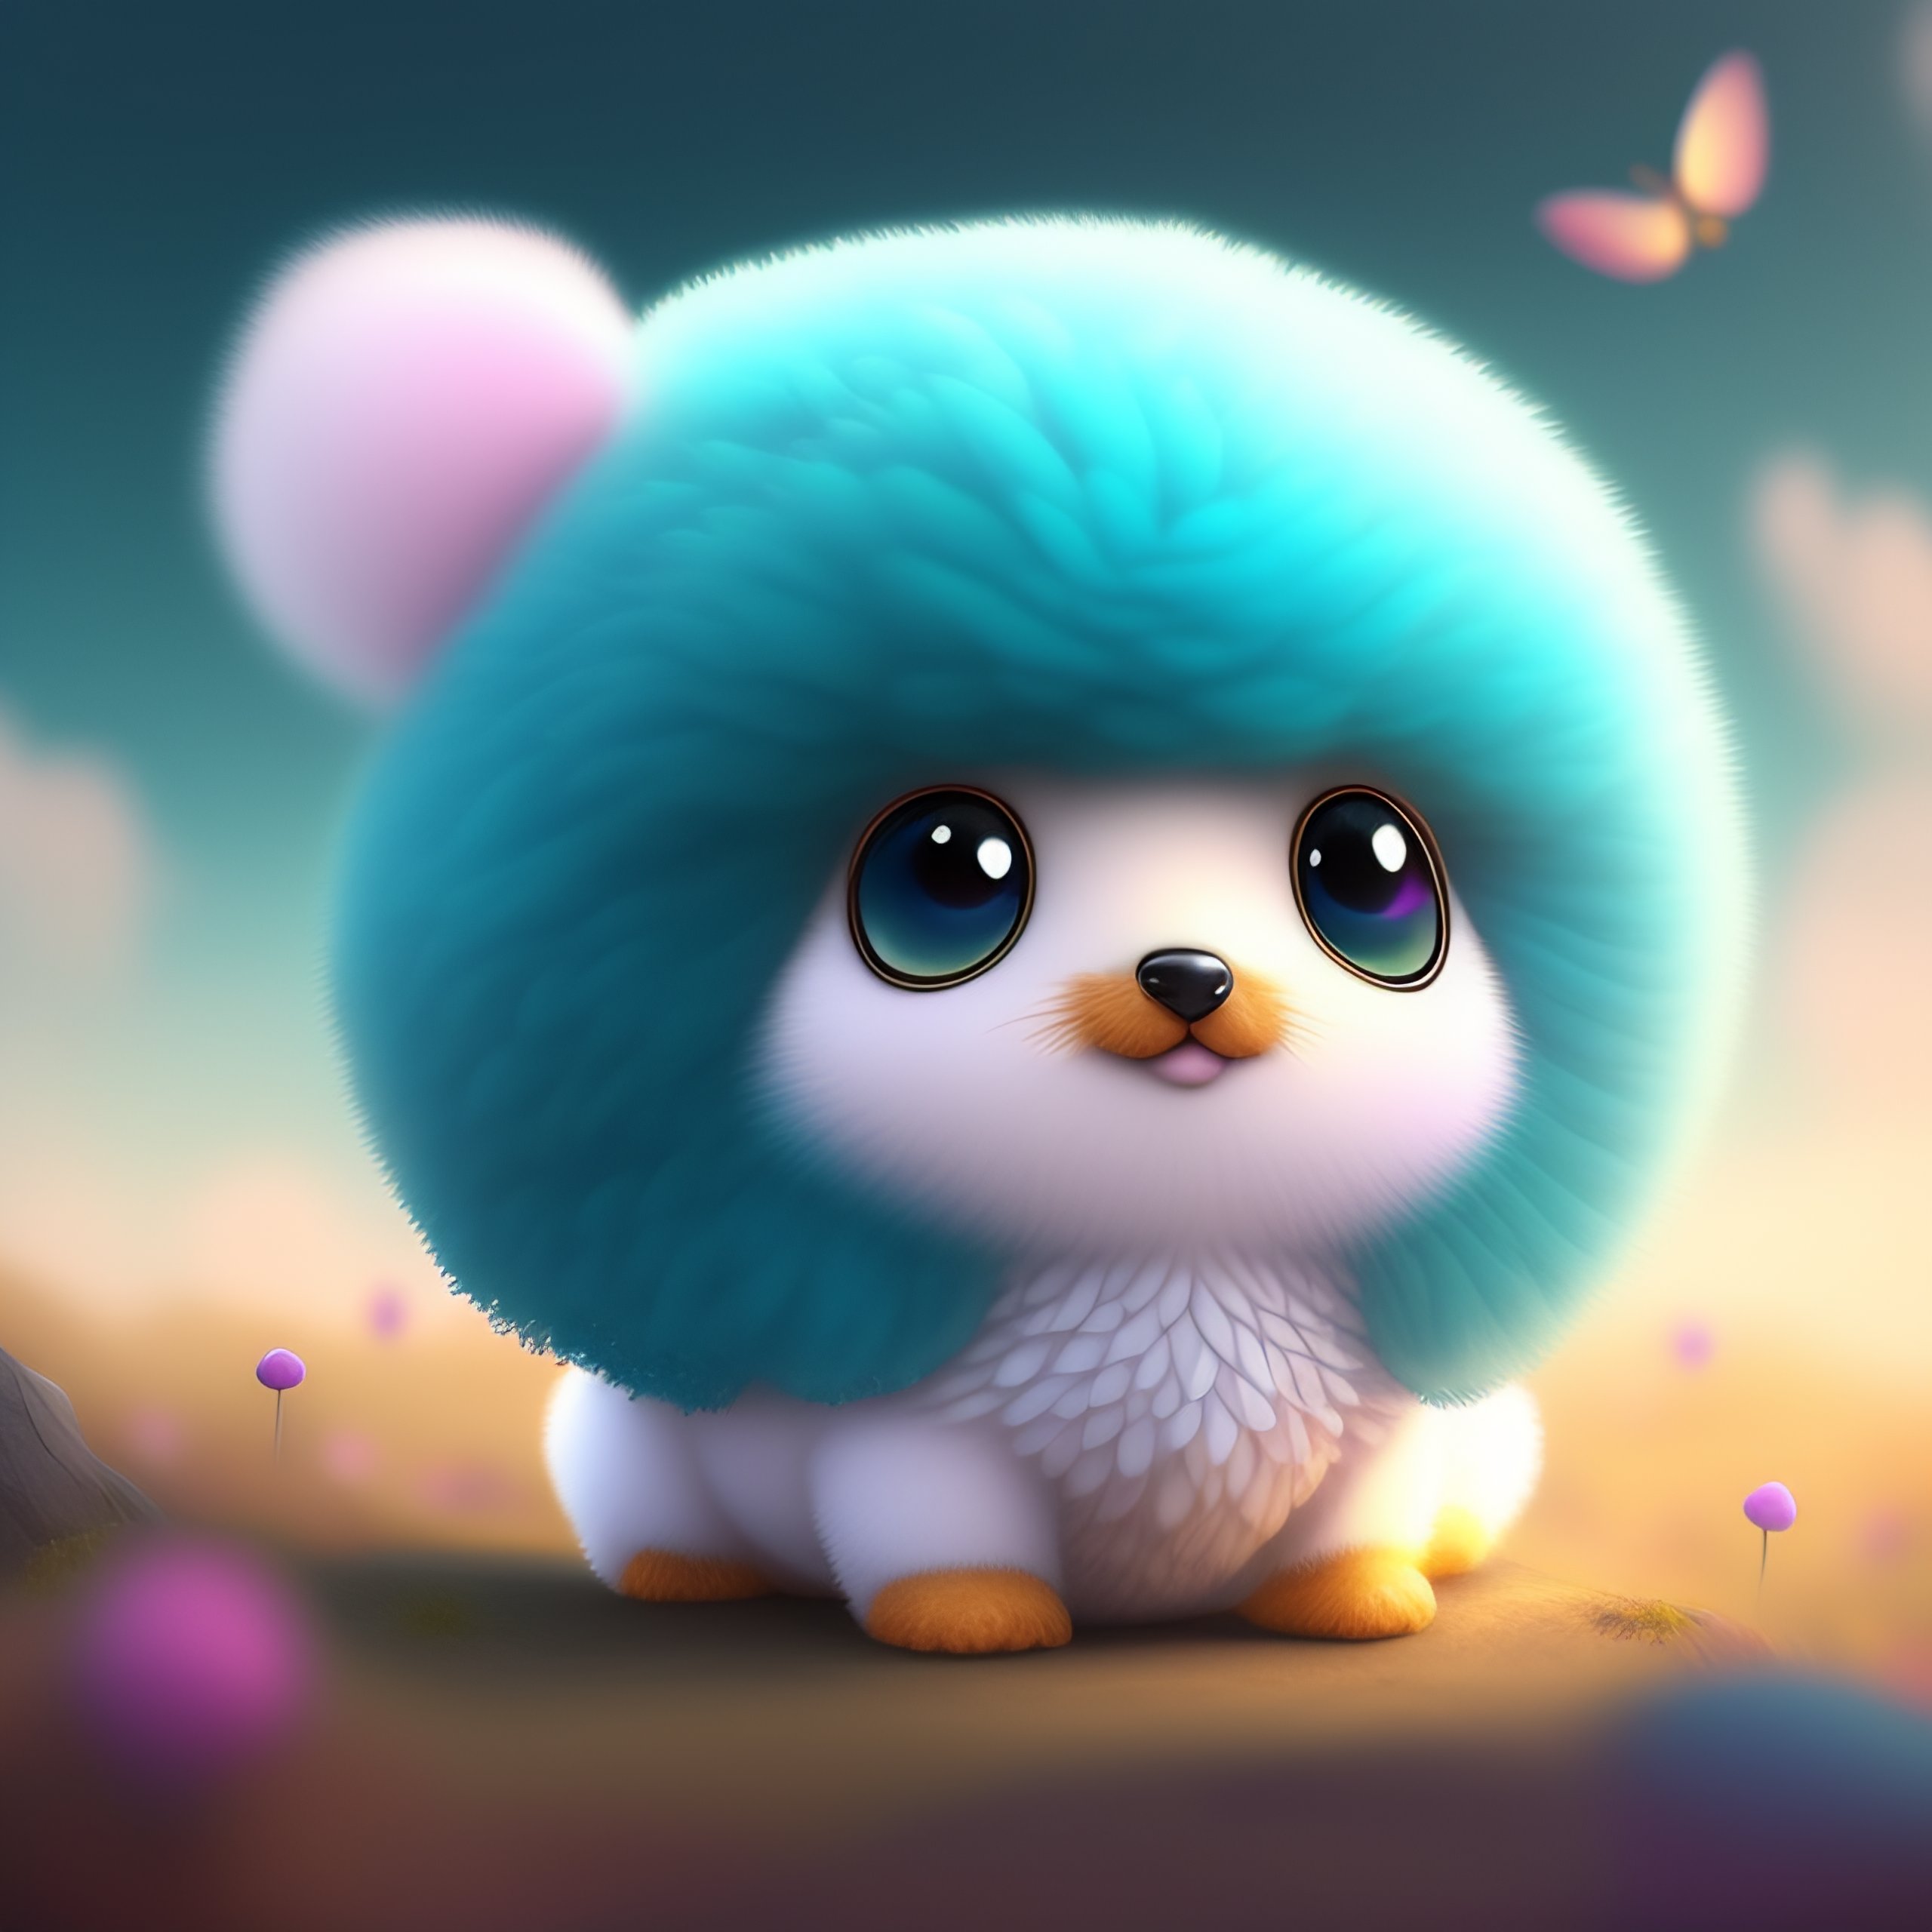 Lexica - Cute and adorable cartoon fluffy baby rhea, fantasy, dreamlike ...